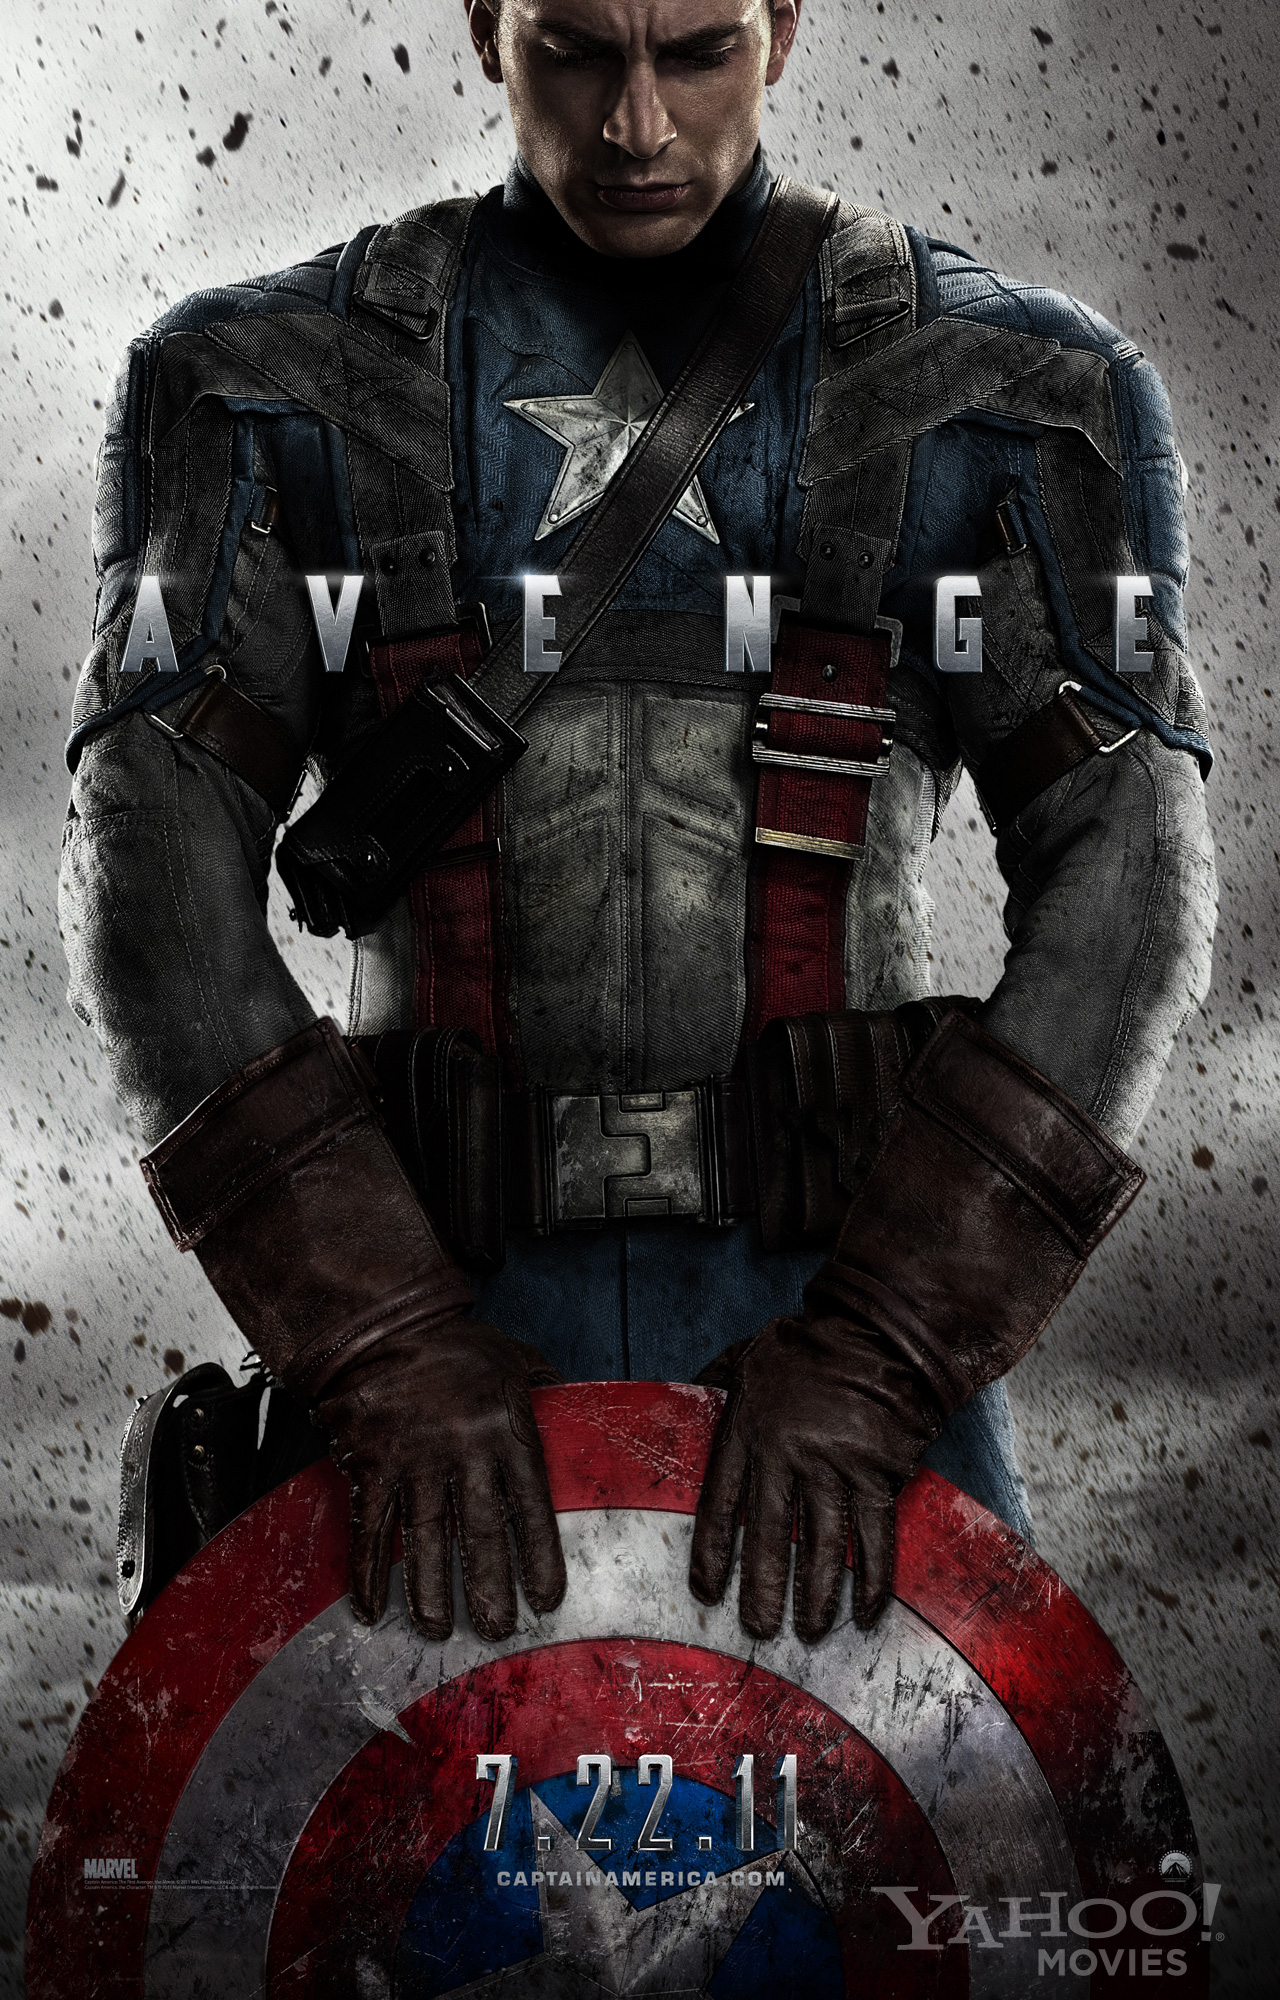 captain-america-movie-poster-image